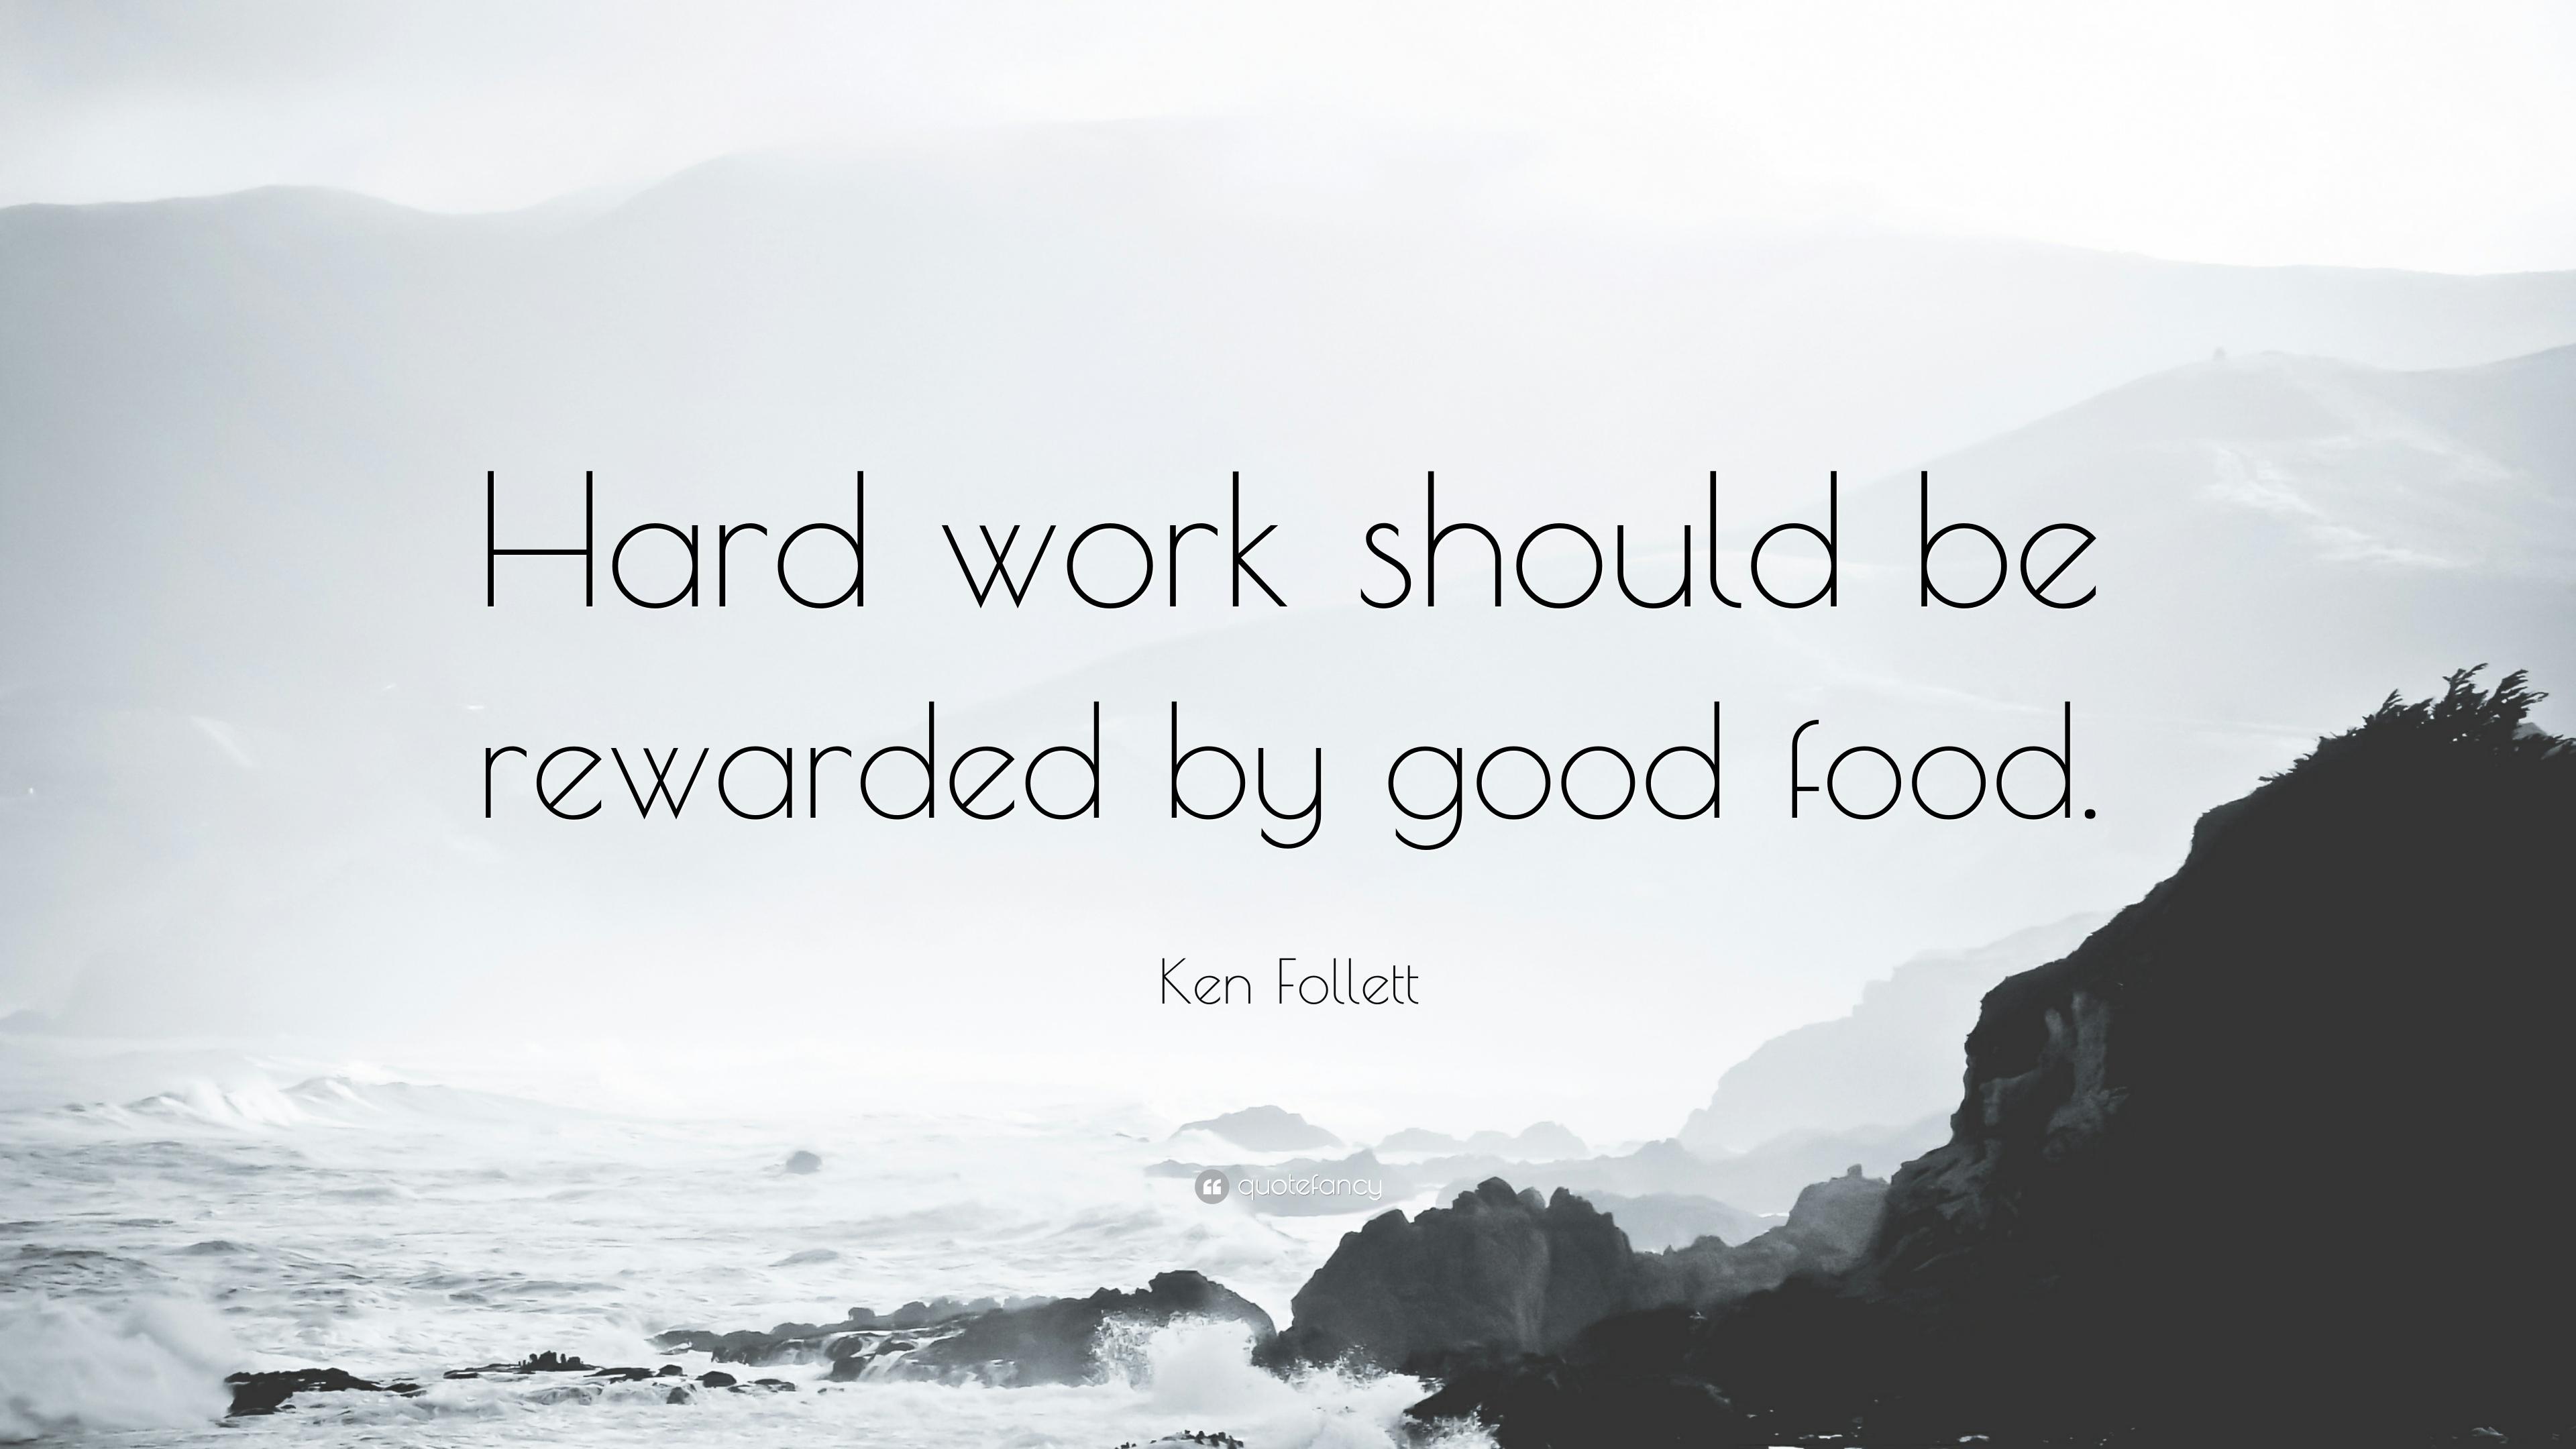 Ken Follett Quote: “Hard work should be rewarded by good